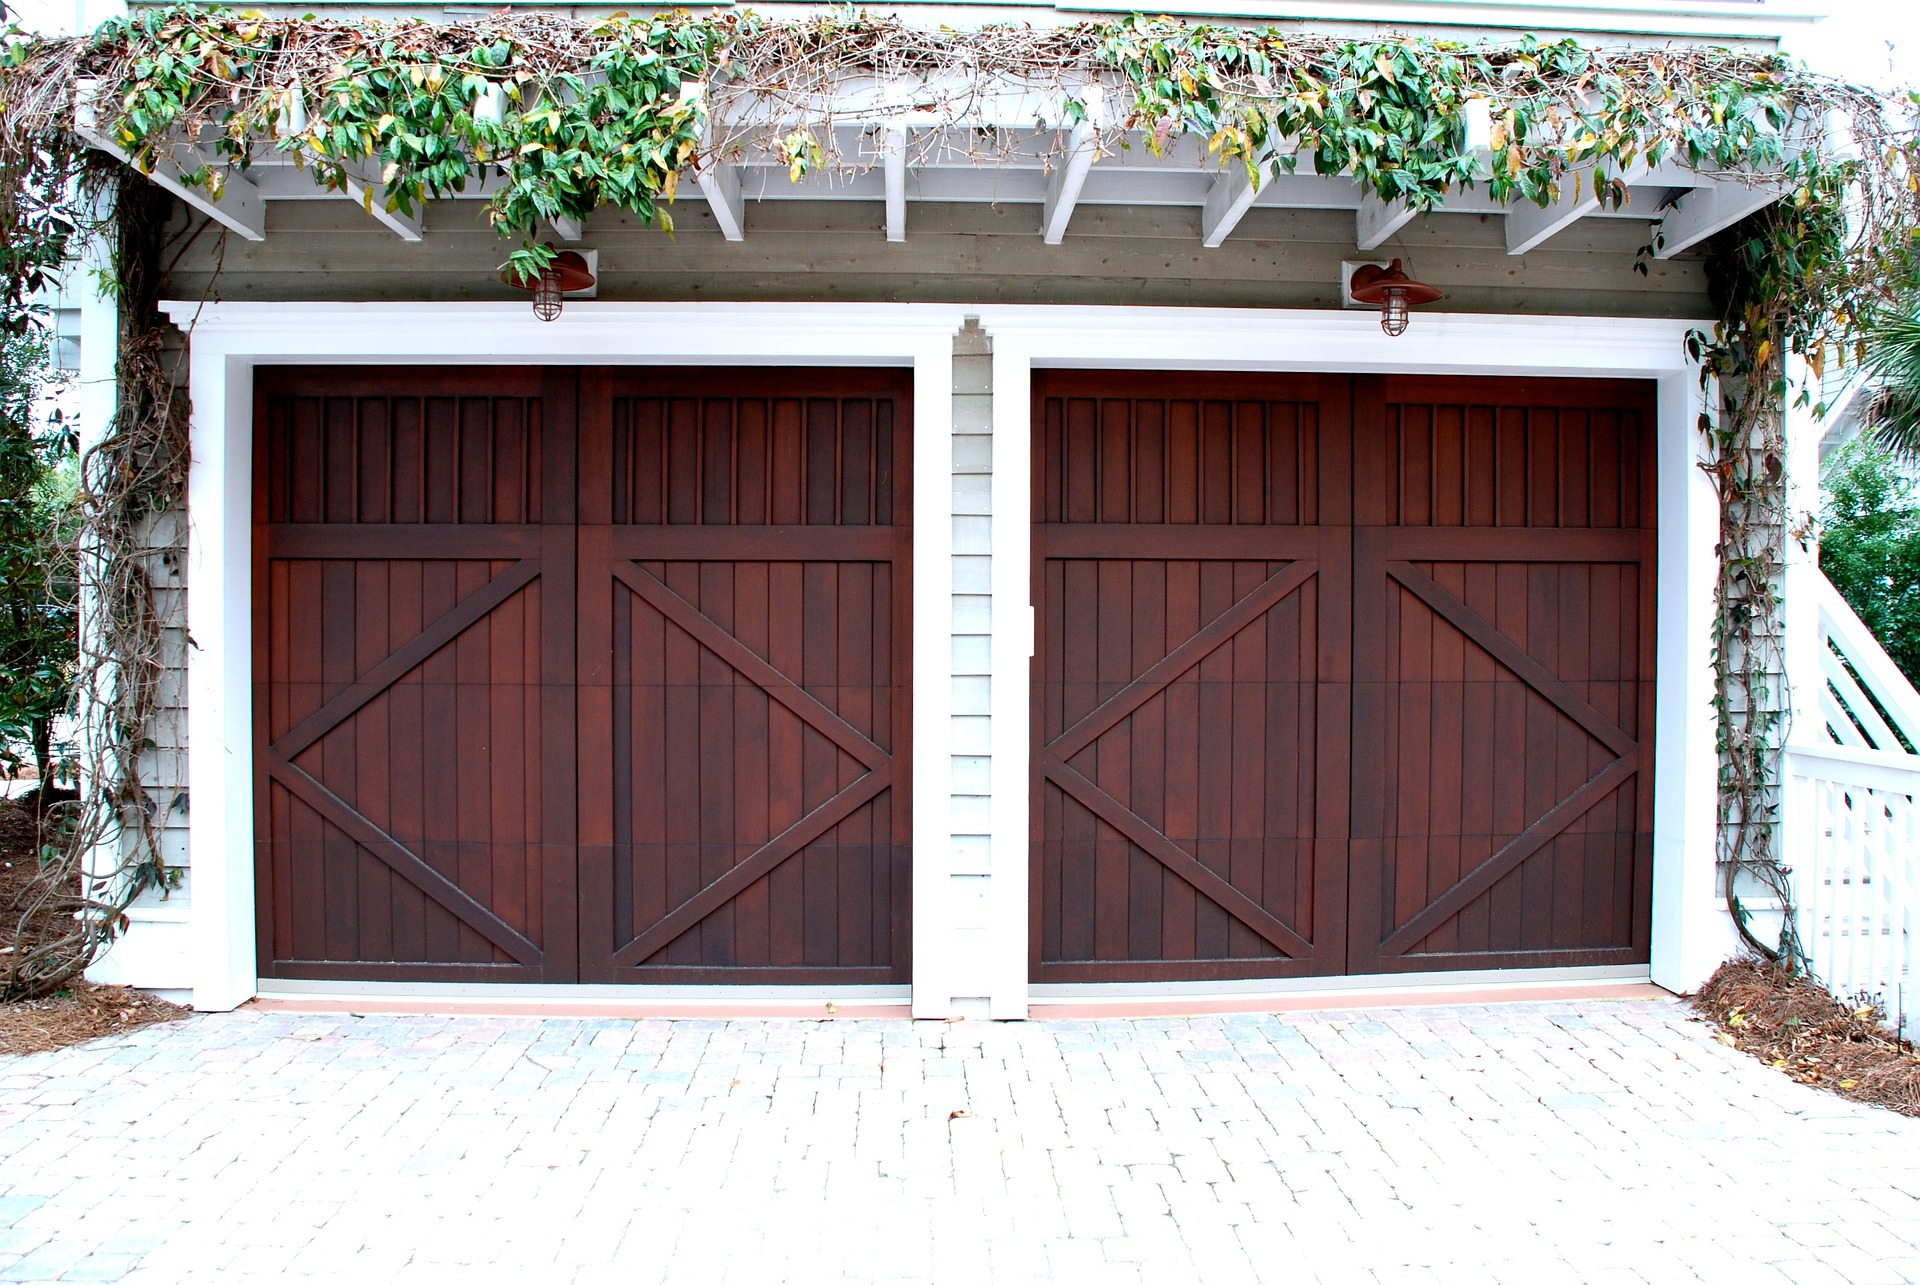 5 Garage Door Safety Tips for Seniors